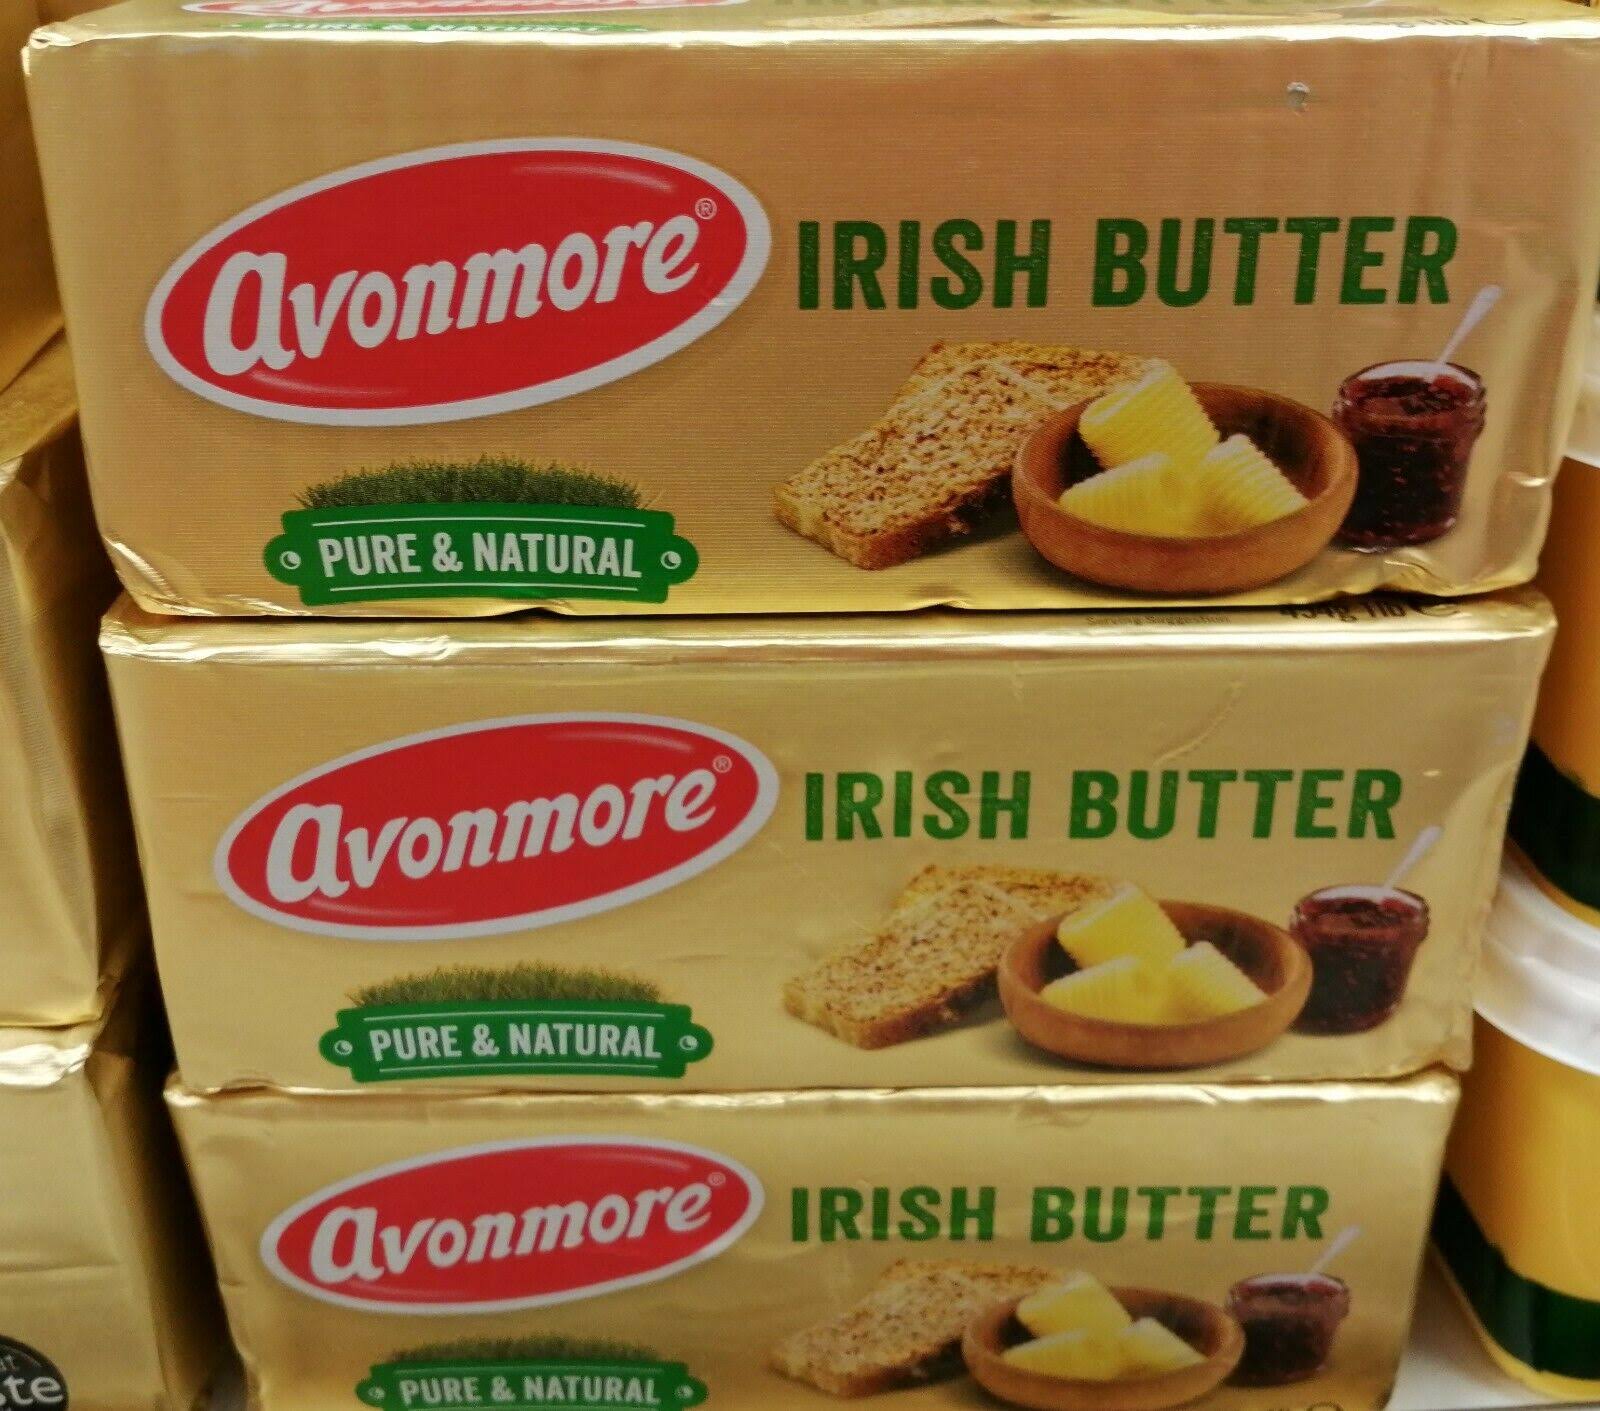 Irish Butter Avonmore - Two Large 454g Packets.